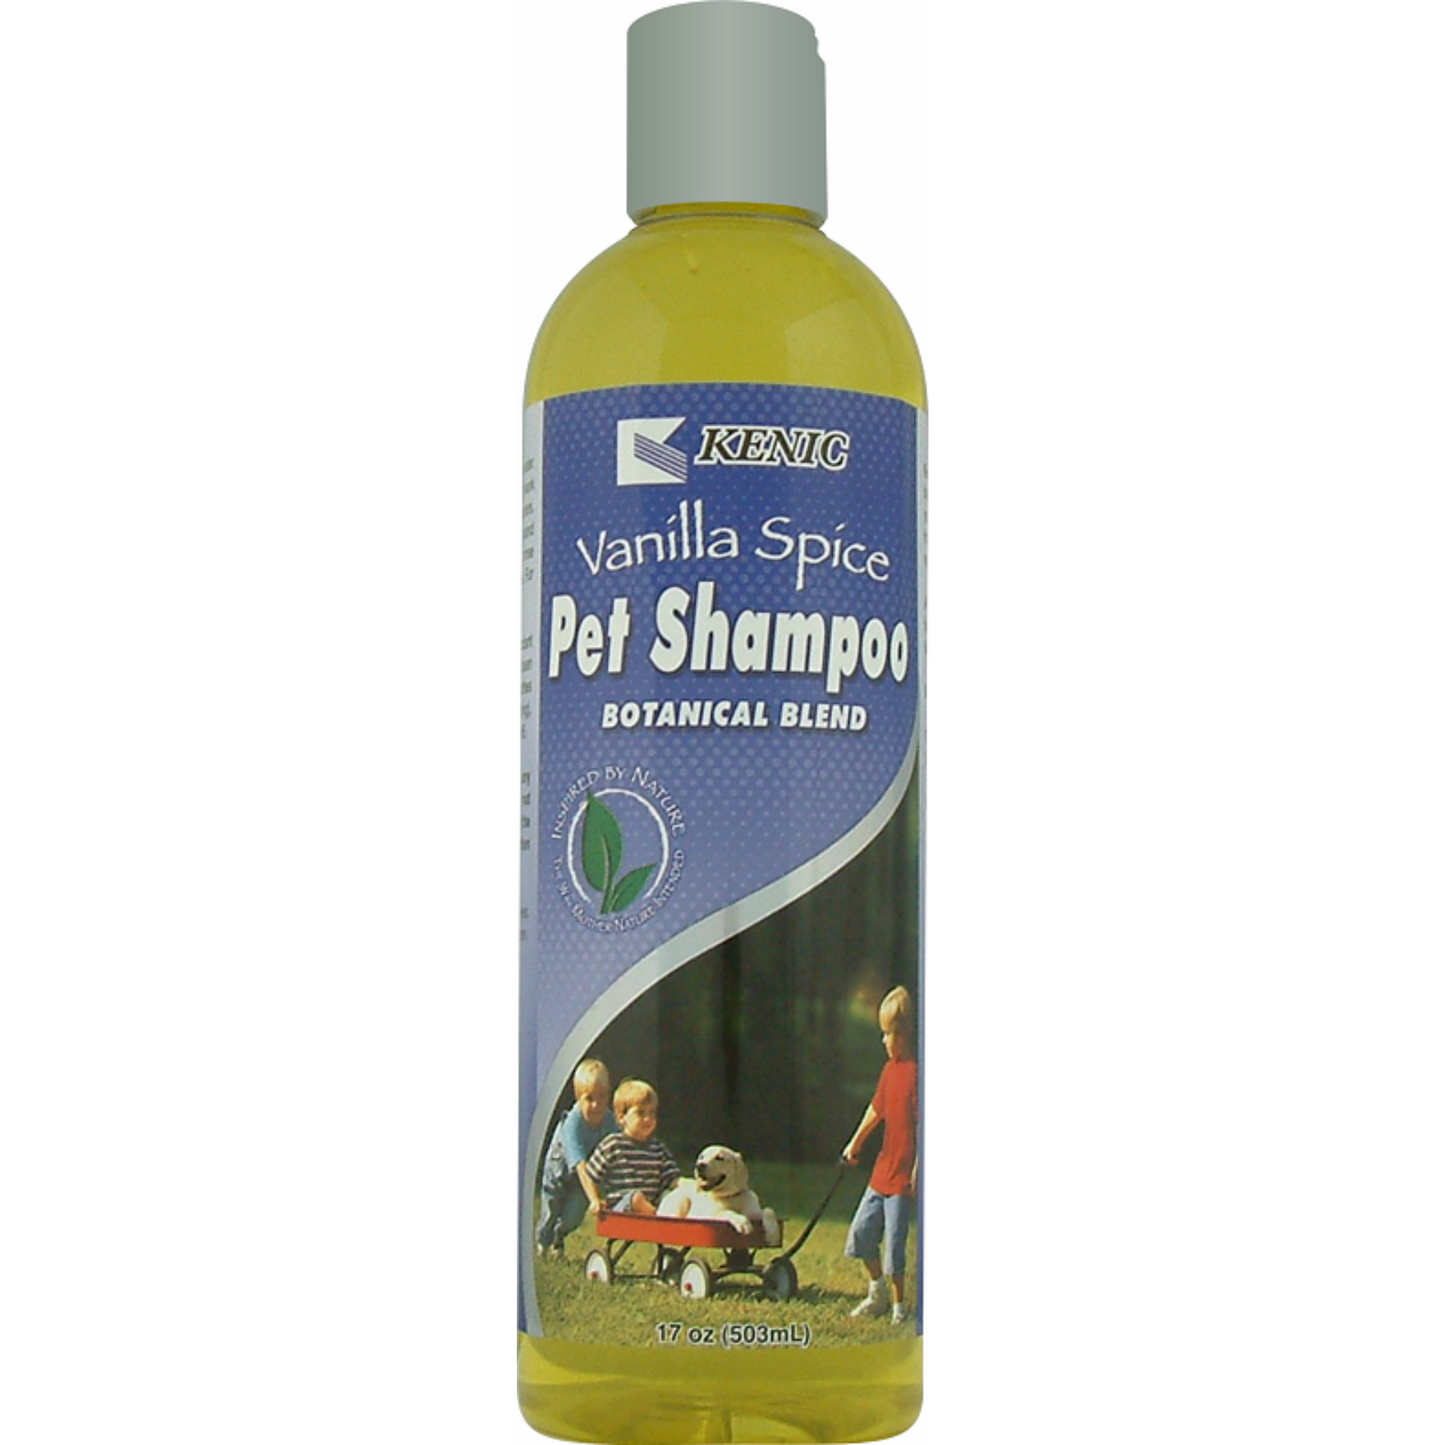 17oz Kenic Vanilla Spice Pet Shampoo